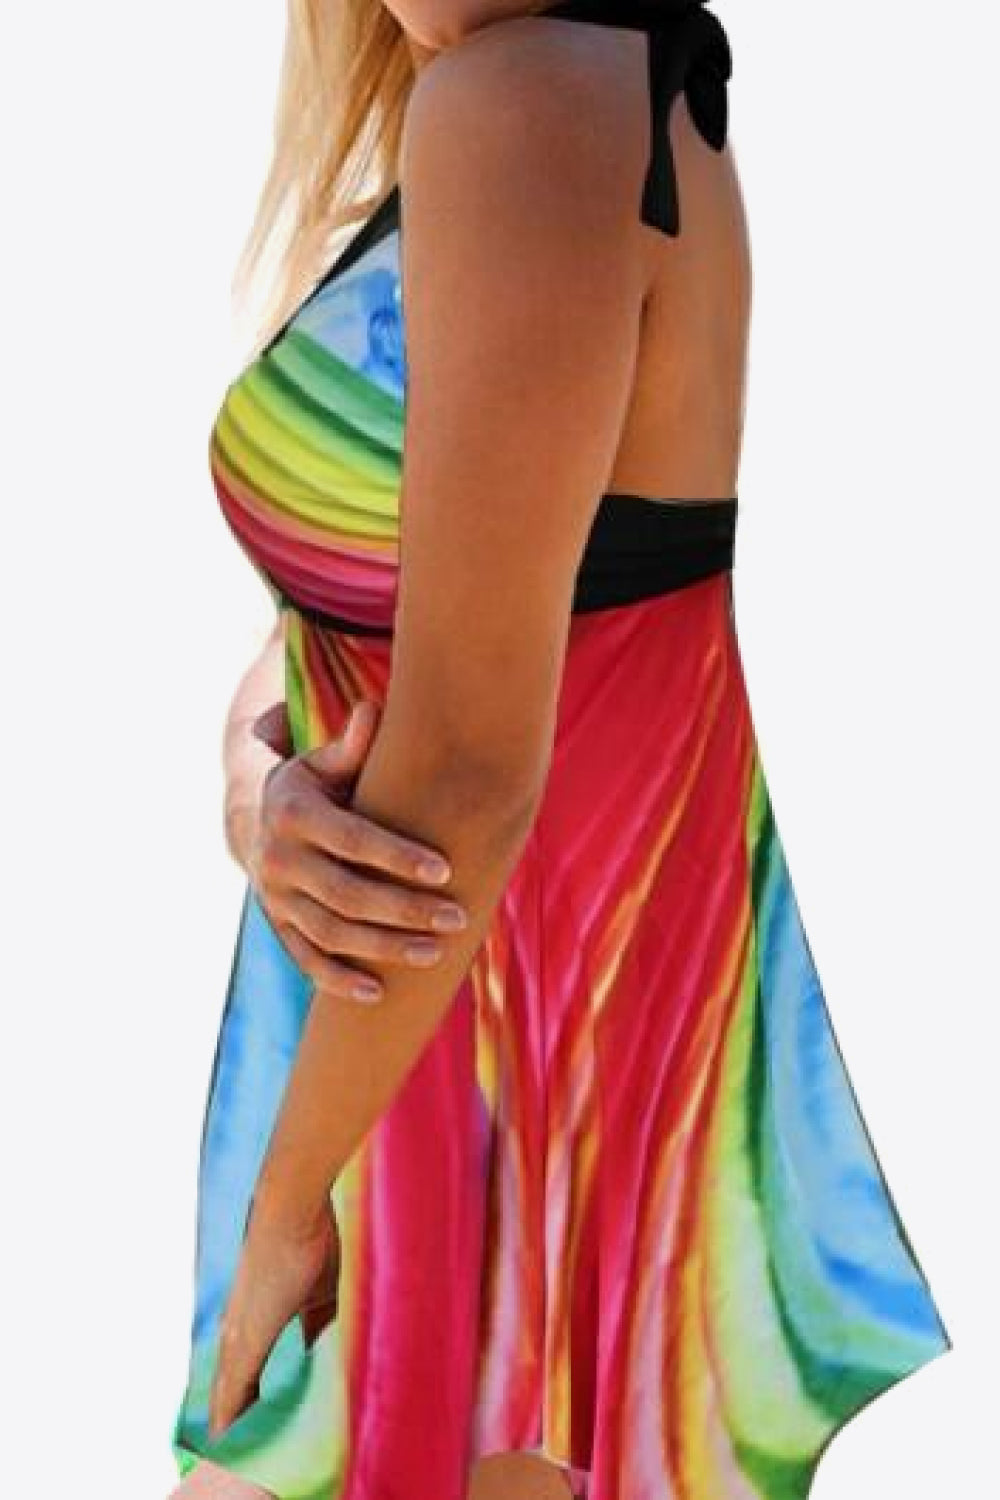 Multicolored Halter Neck Two-Piece Swimsuit - The Fashion Unicorn